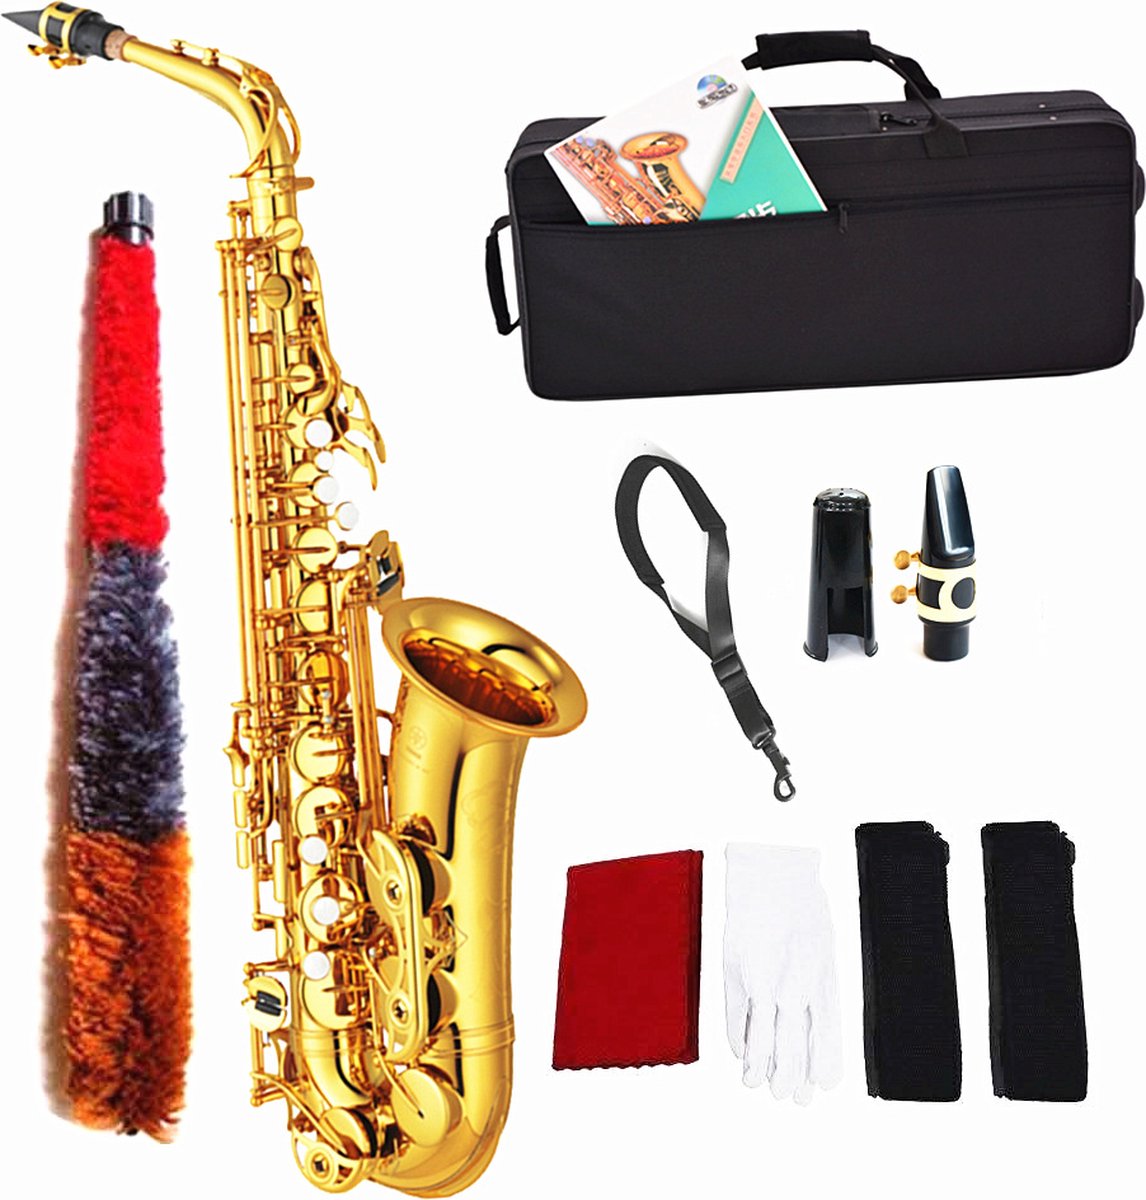 WK Knobbout Alto Saxofoon-Eb-Hoge kwaliteit messing met elektroforetische gouden oppervlakte-Inclusief accessoires-met koffer-blaasinstrument